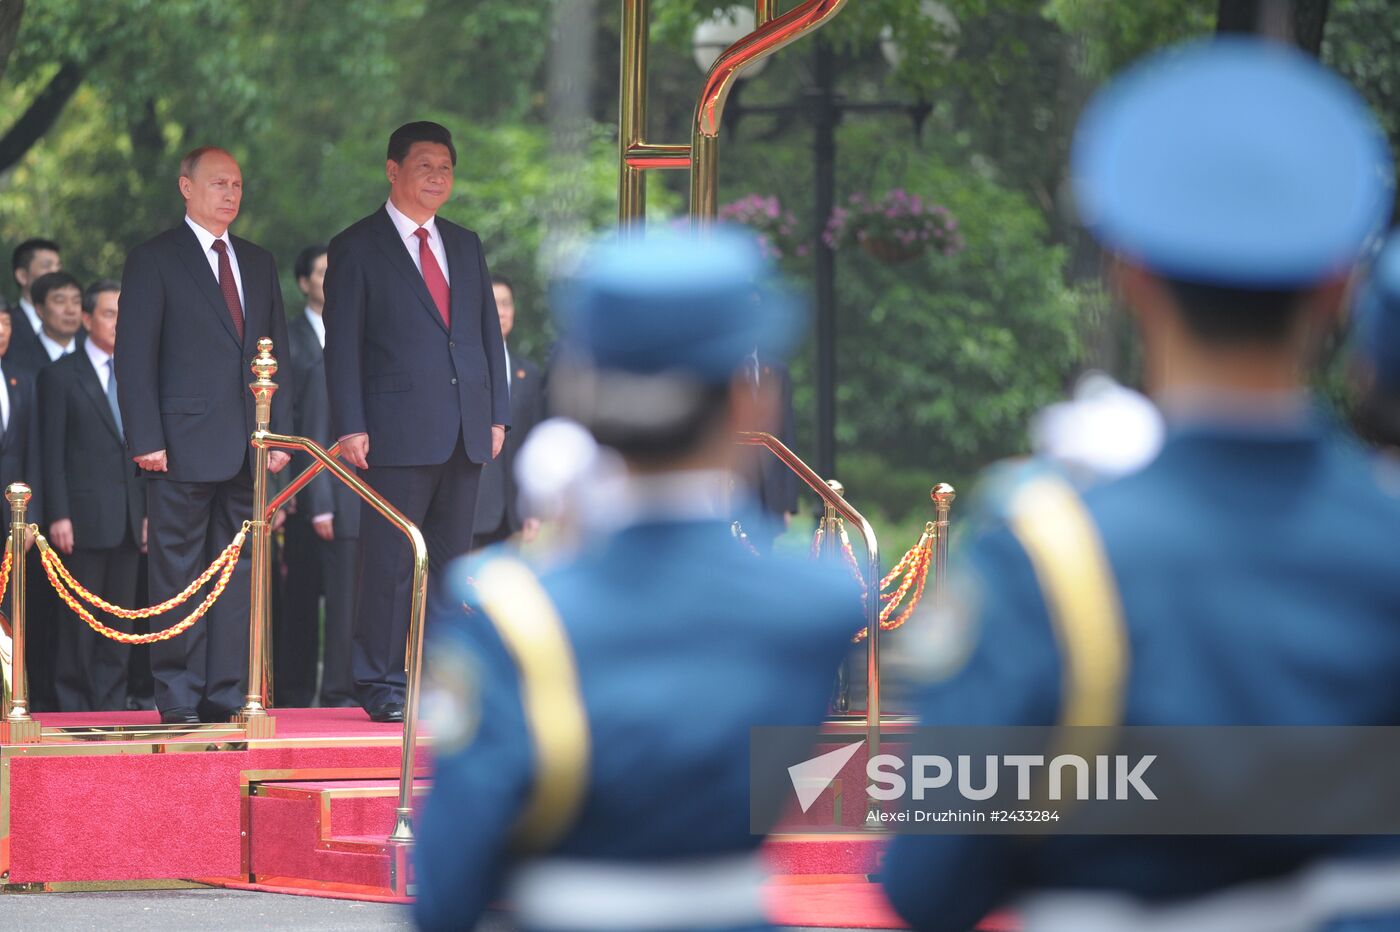 Vladimir Putin pays official visit to People's Republic of China